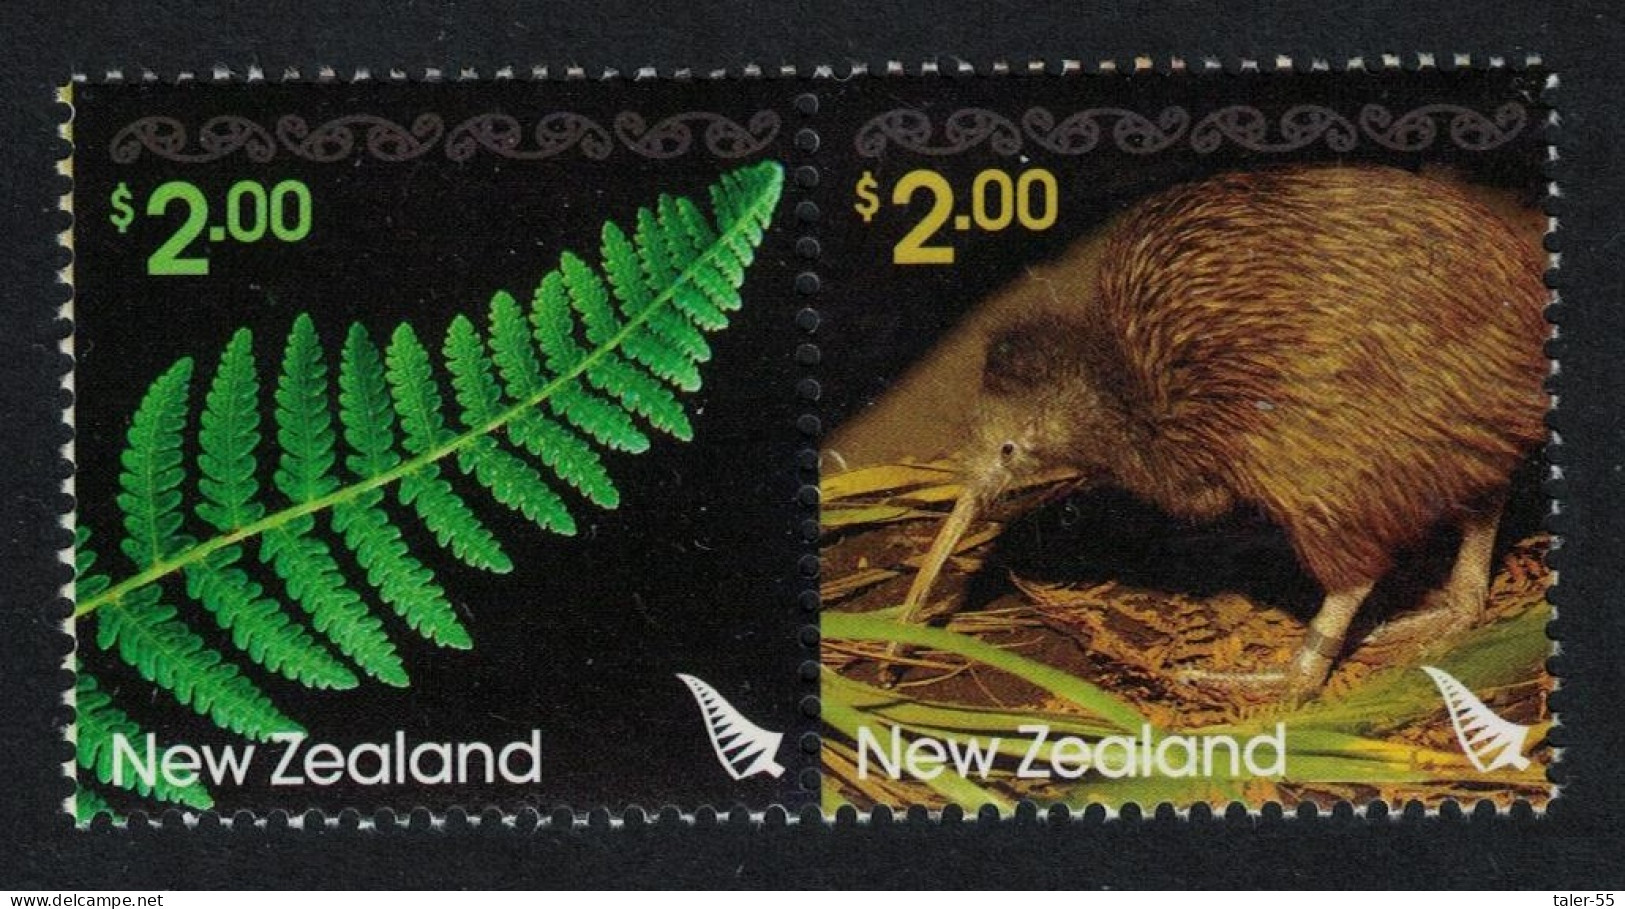 New Zealand Kiwi Bird Fern Pair 2006 MNH SG#2923 - Neufs